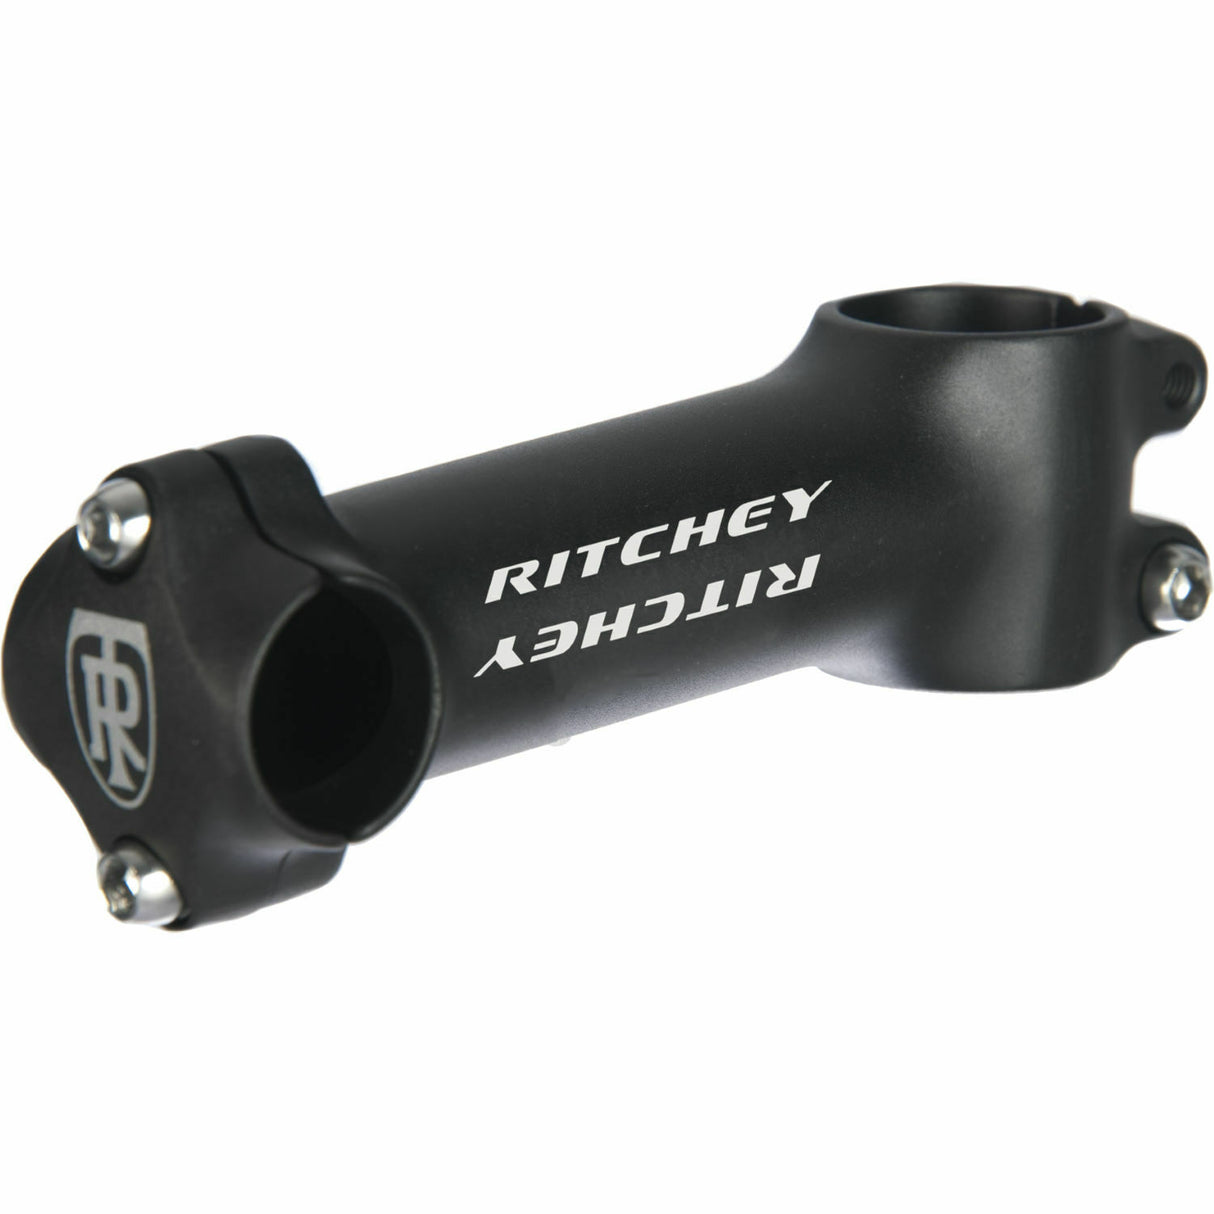 Ritchey 2 Bolt Alloy Stem - 110mm - 31.8mm - 1 1/8 - 6 Degree Rise - Sportandleisure.com (6968144560282)